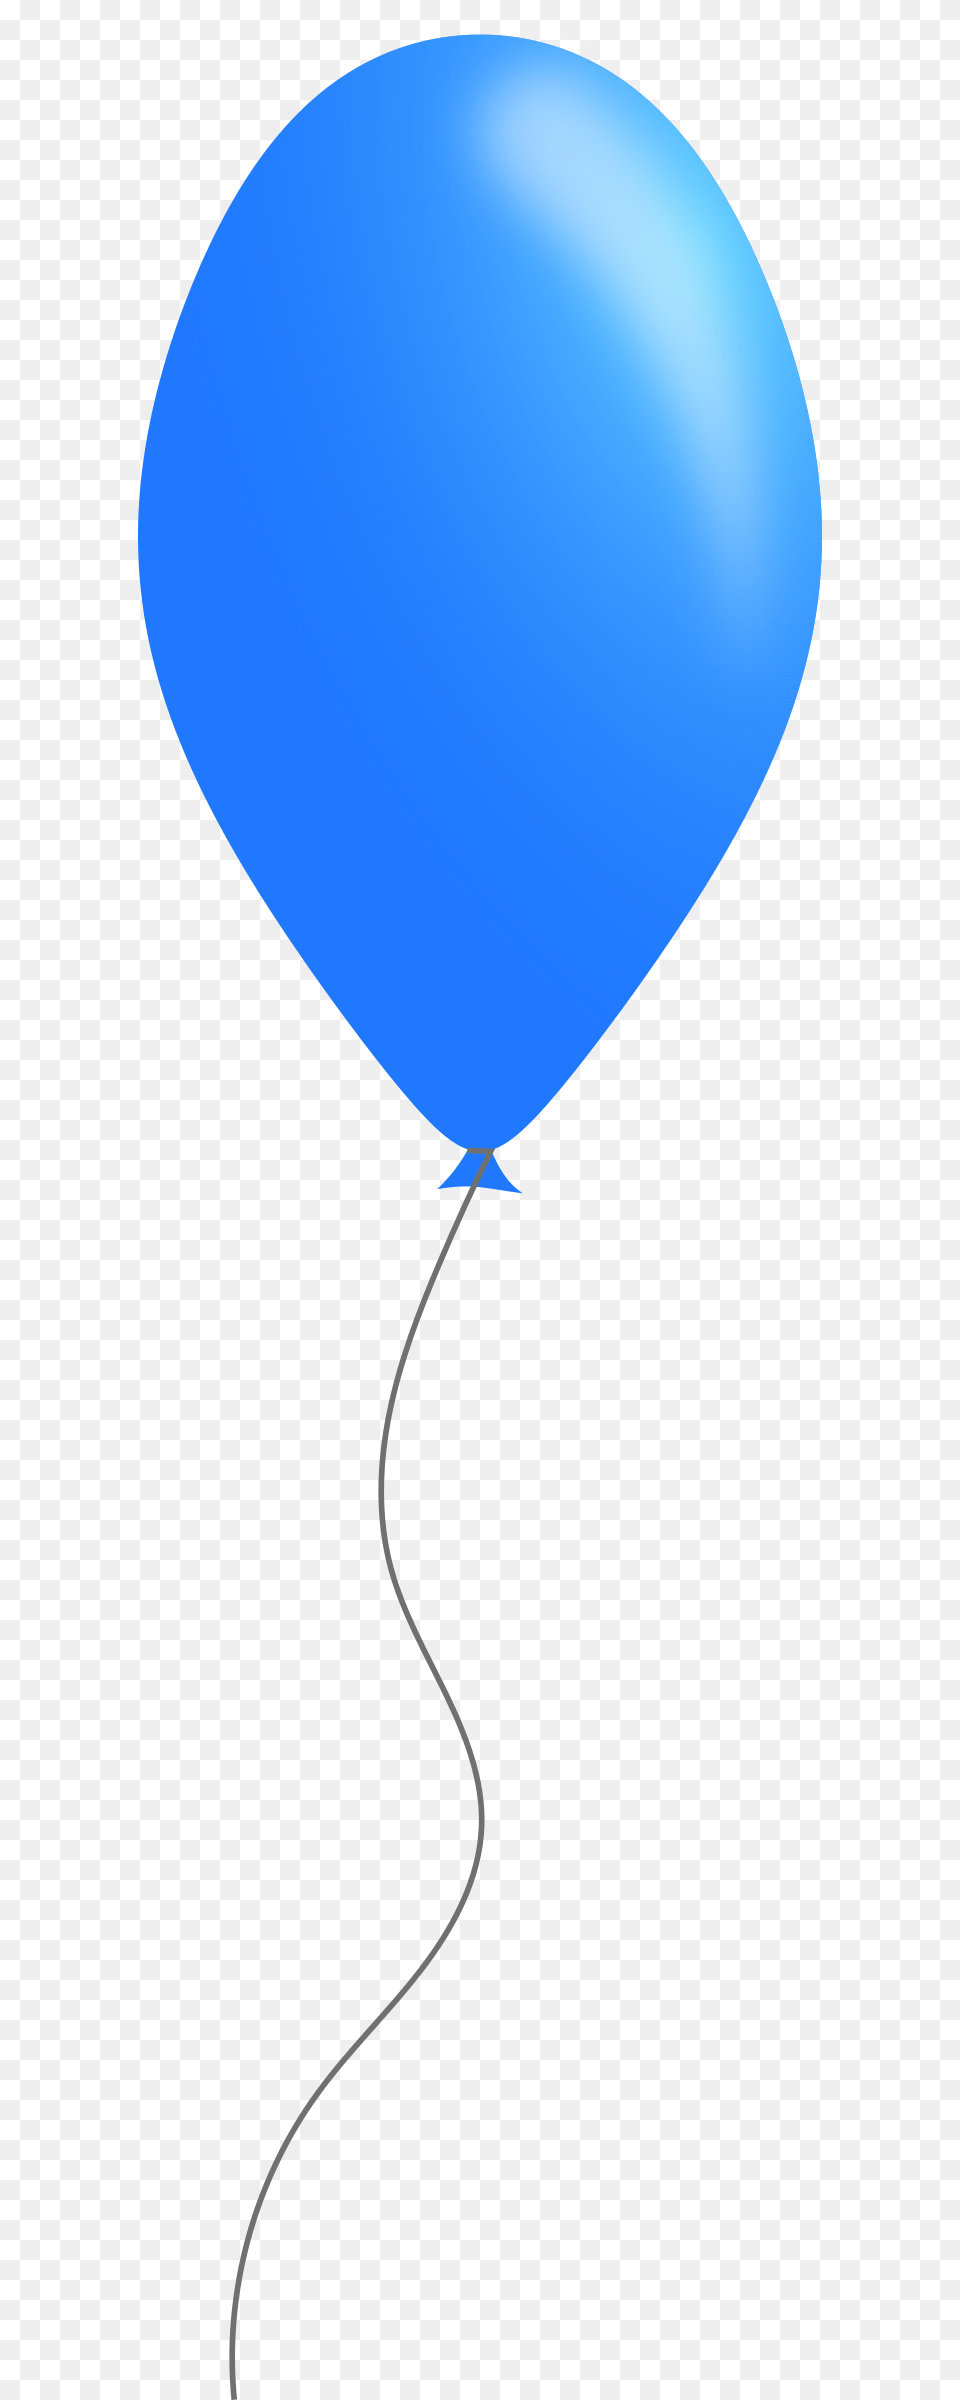 Big Image, Balloon Png